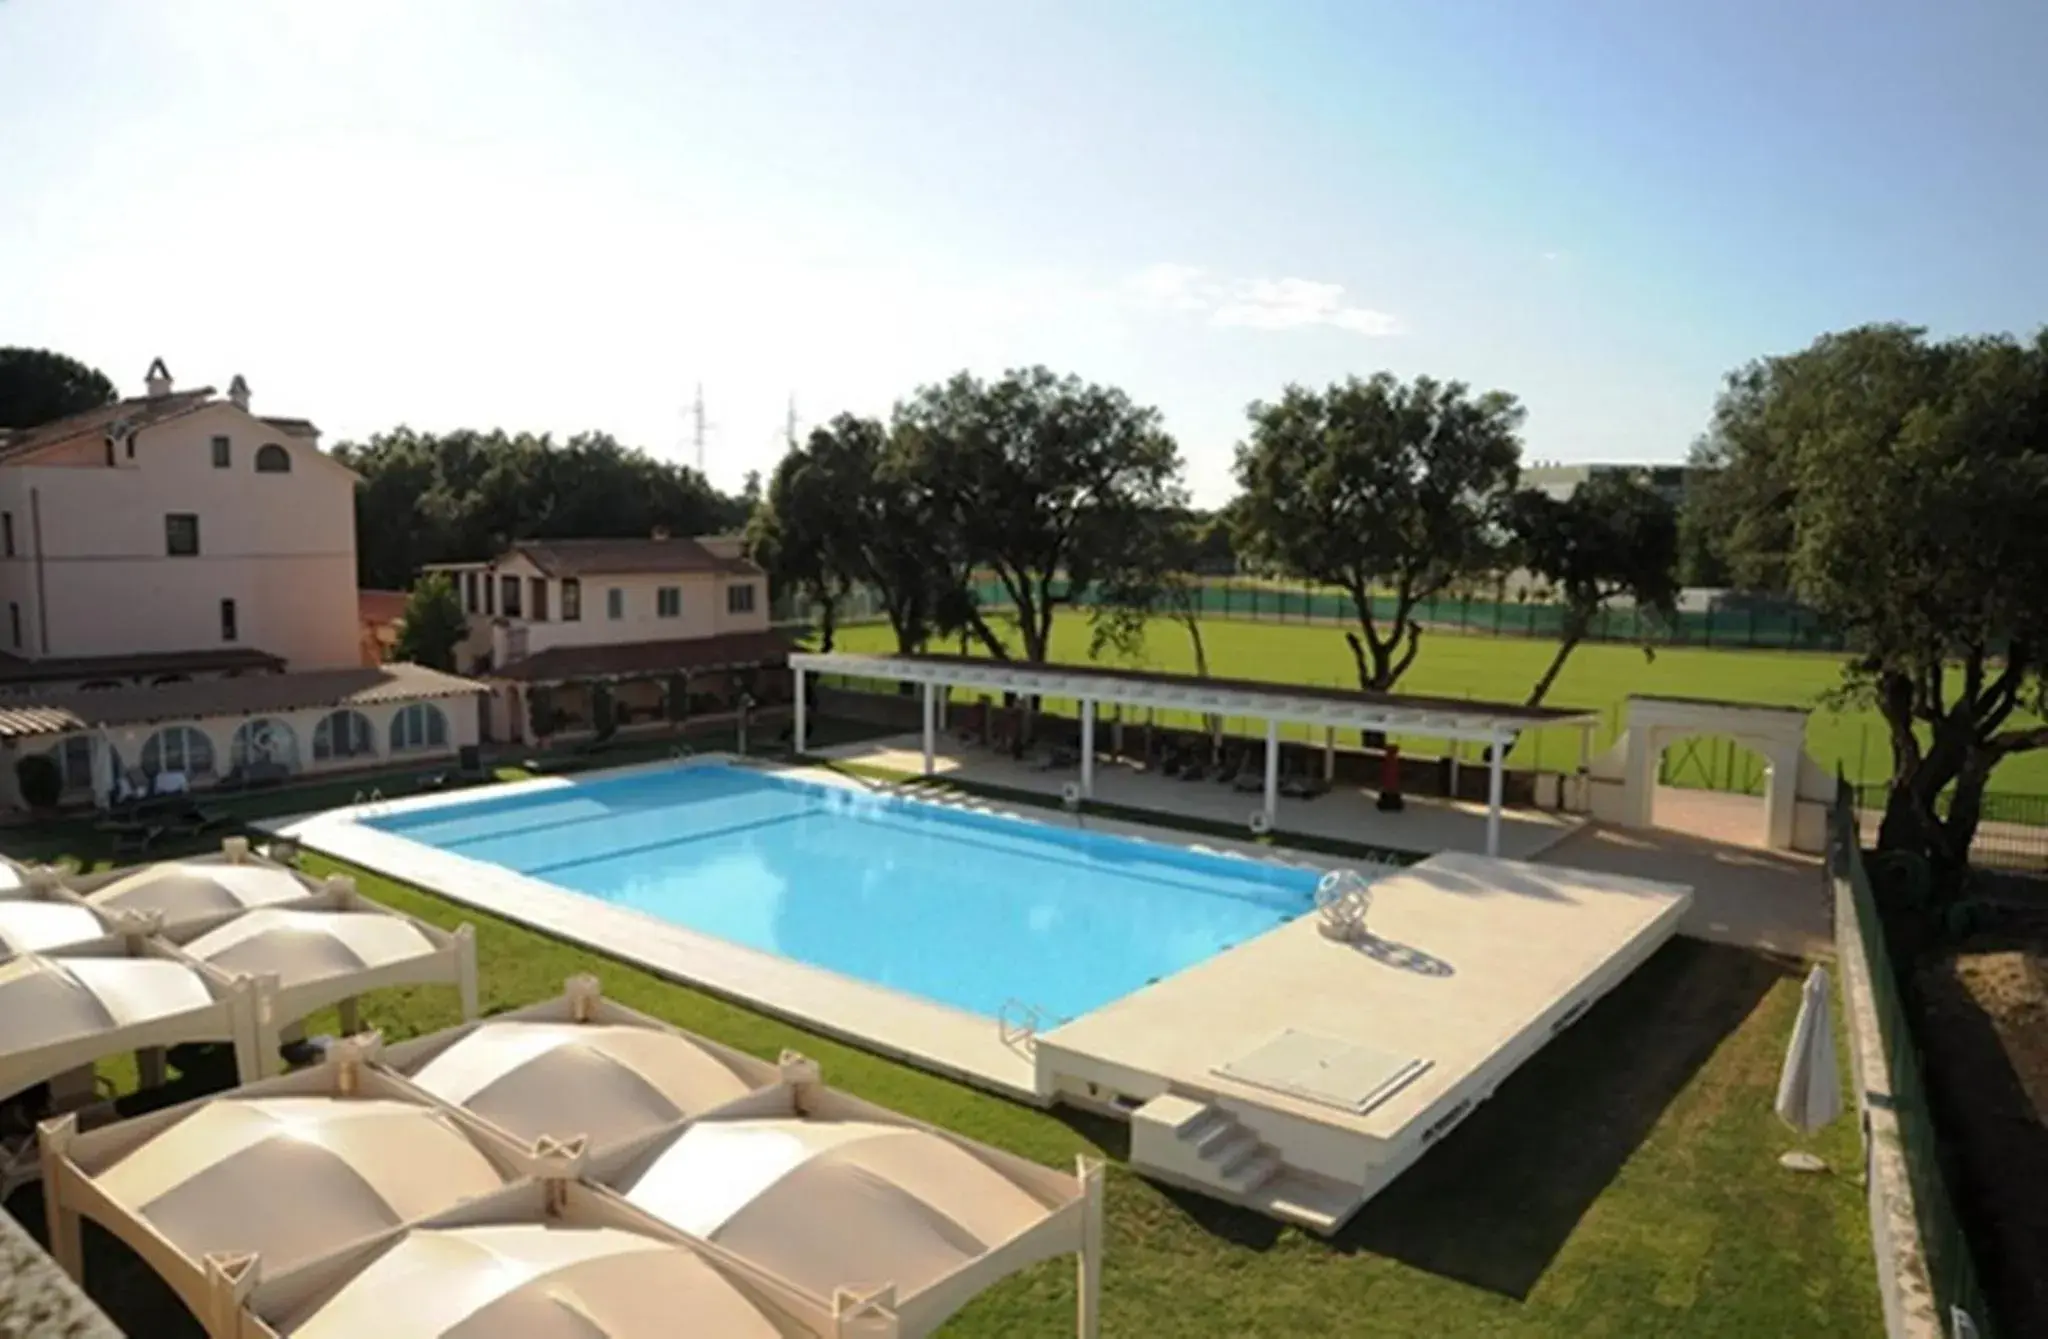 Pool View in Mancini Park Hotel